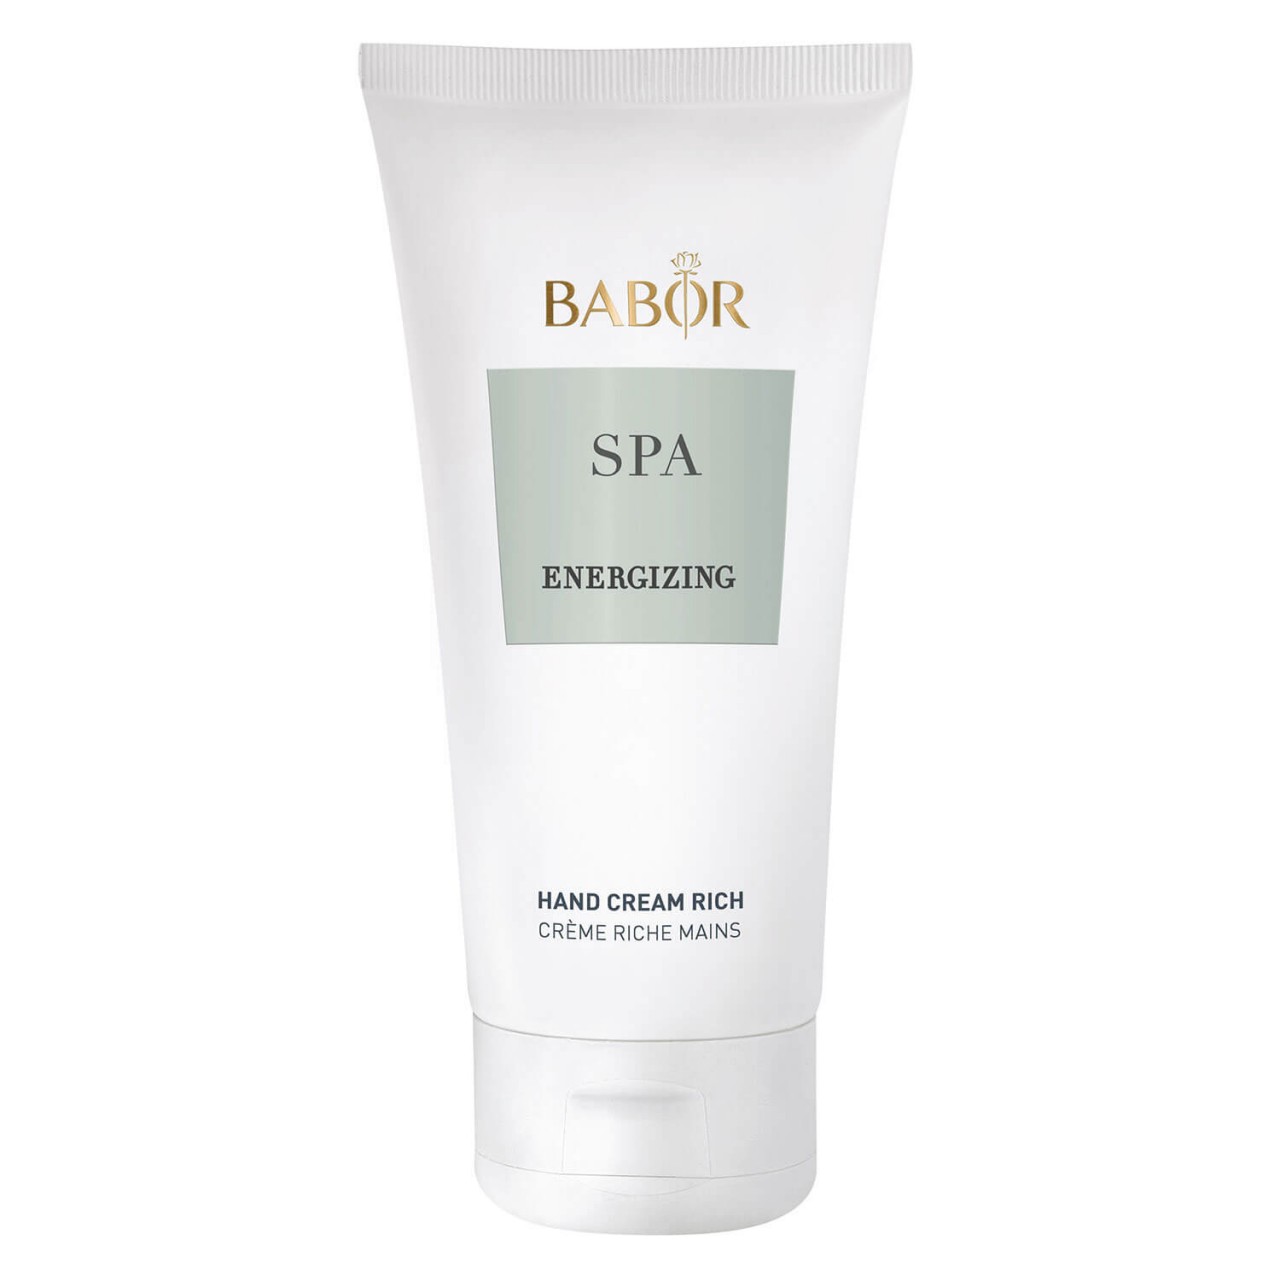 BABOR SPA - Energizing Energizing Hand Cream Rich von BABOR